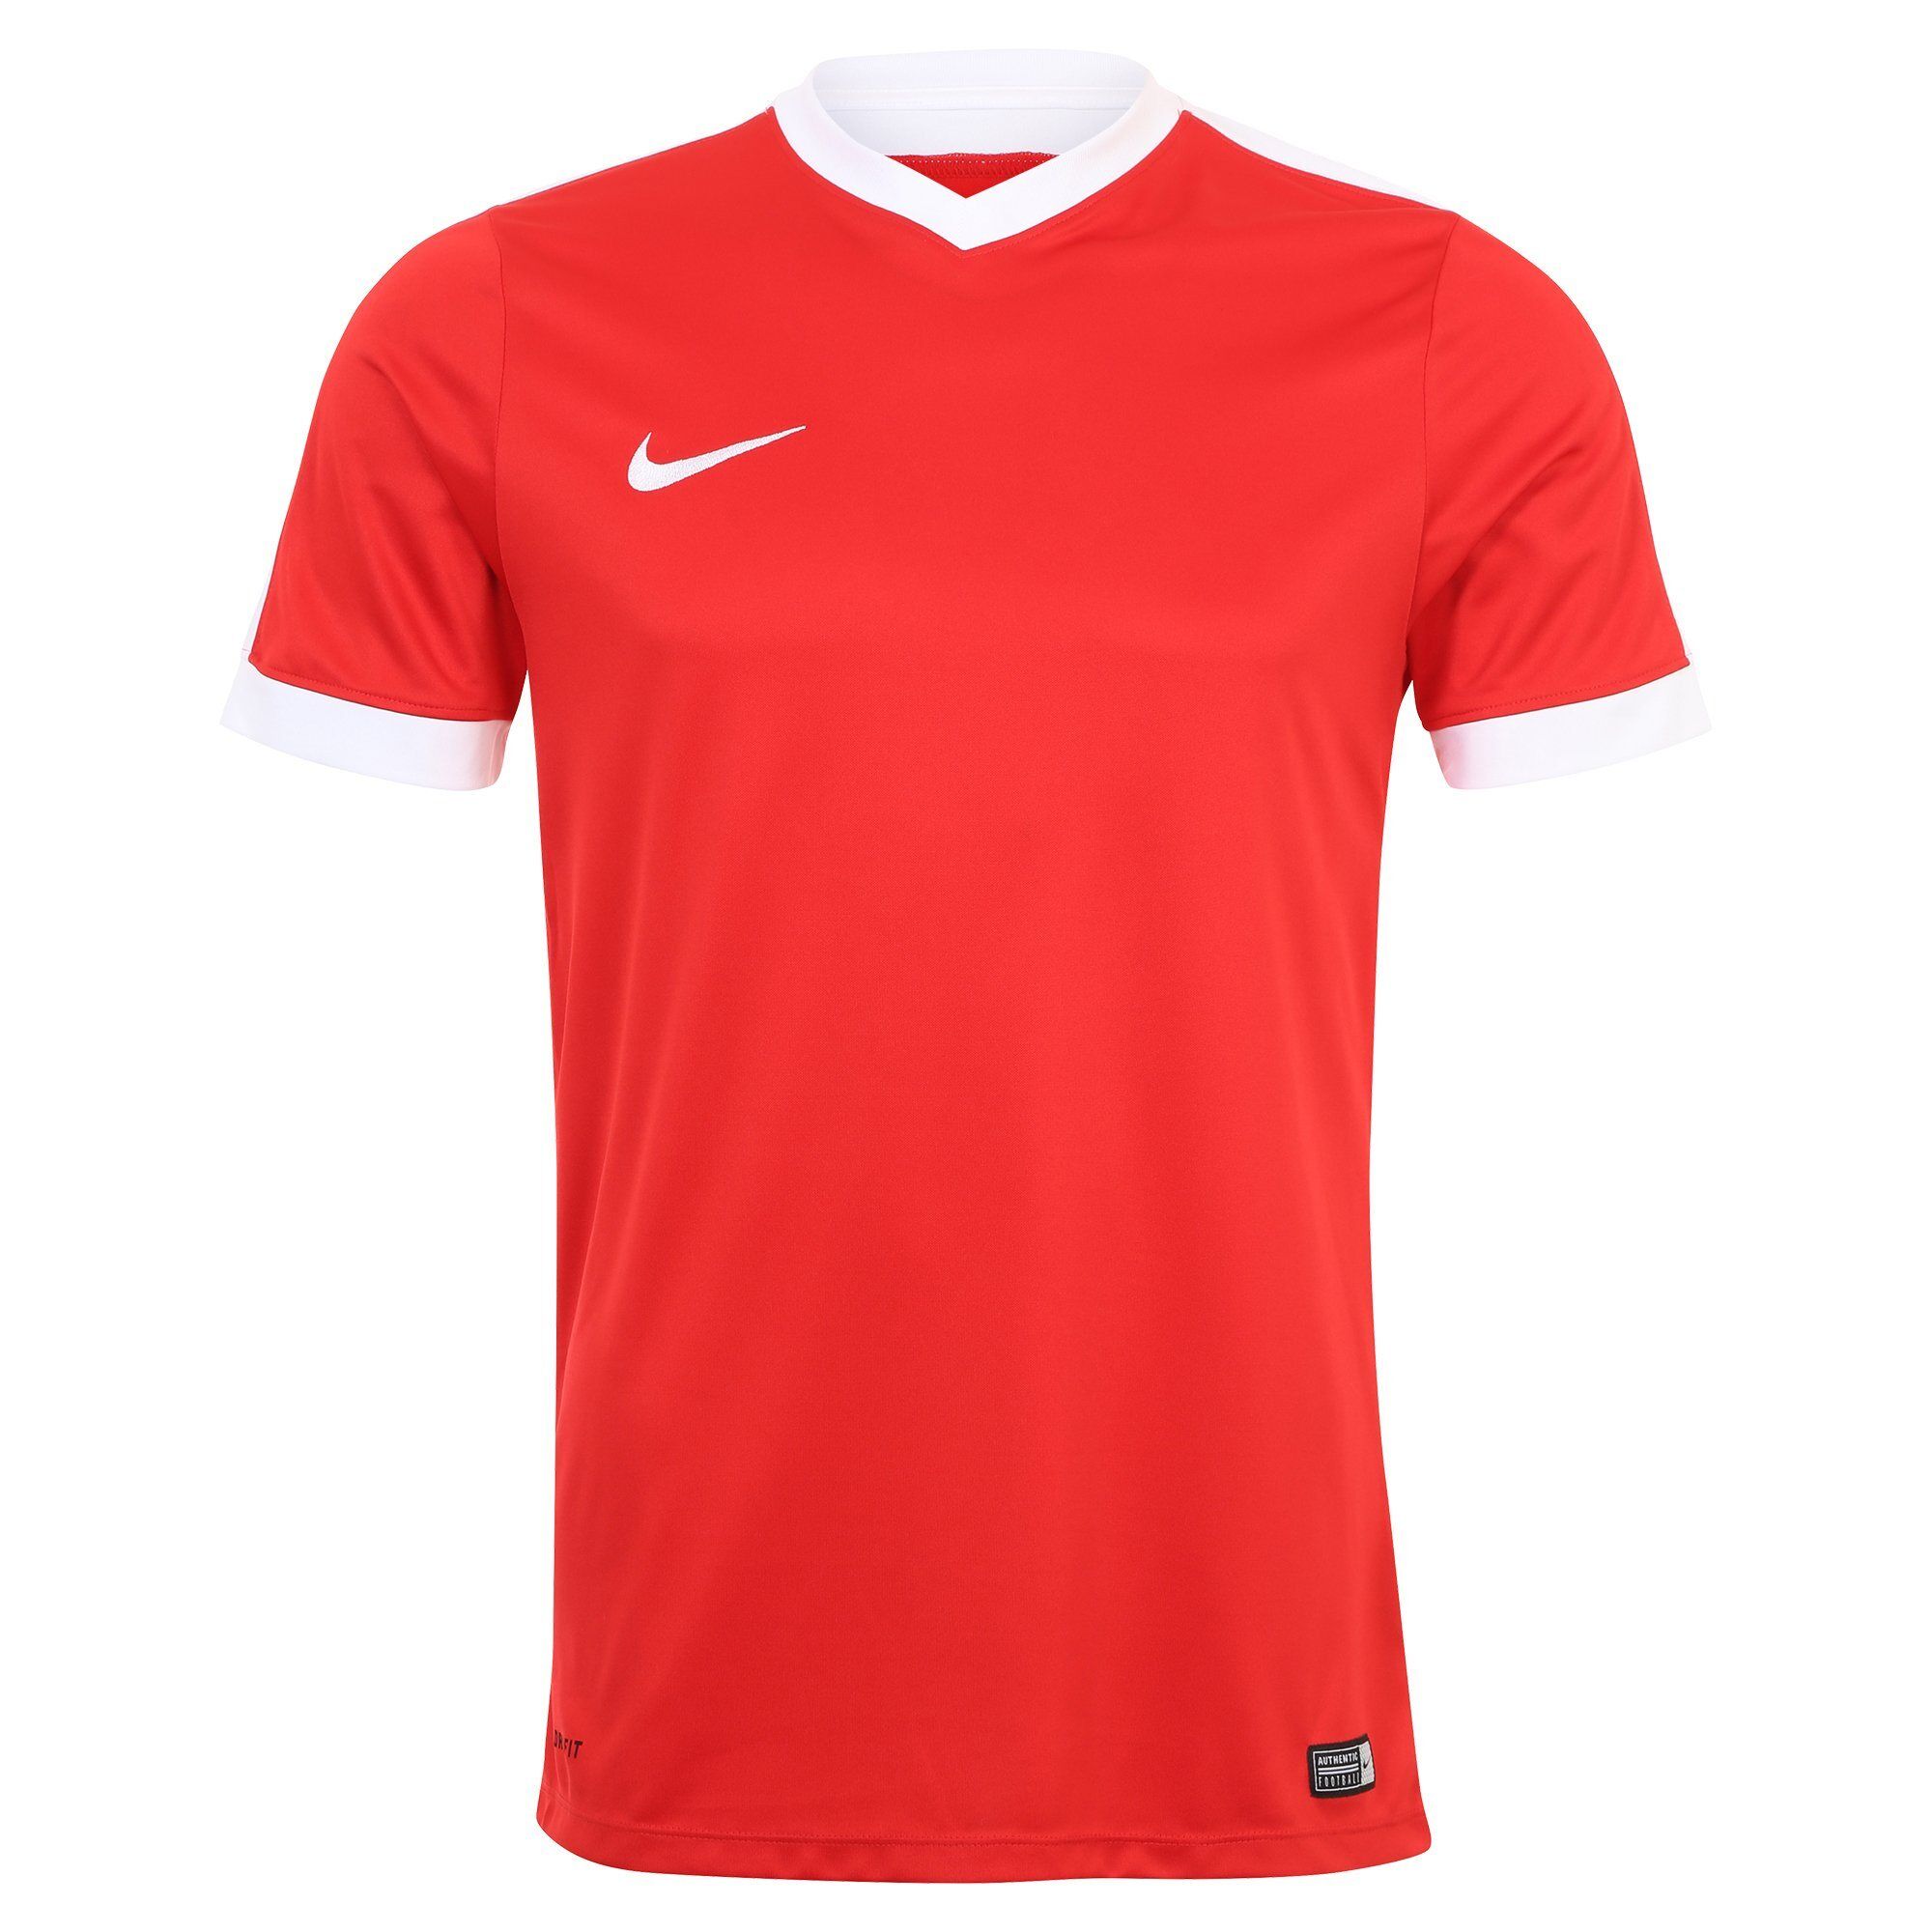 Nike Trikot »Striker Iv«, rot-weiß